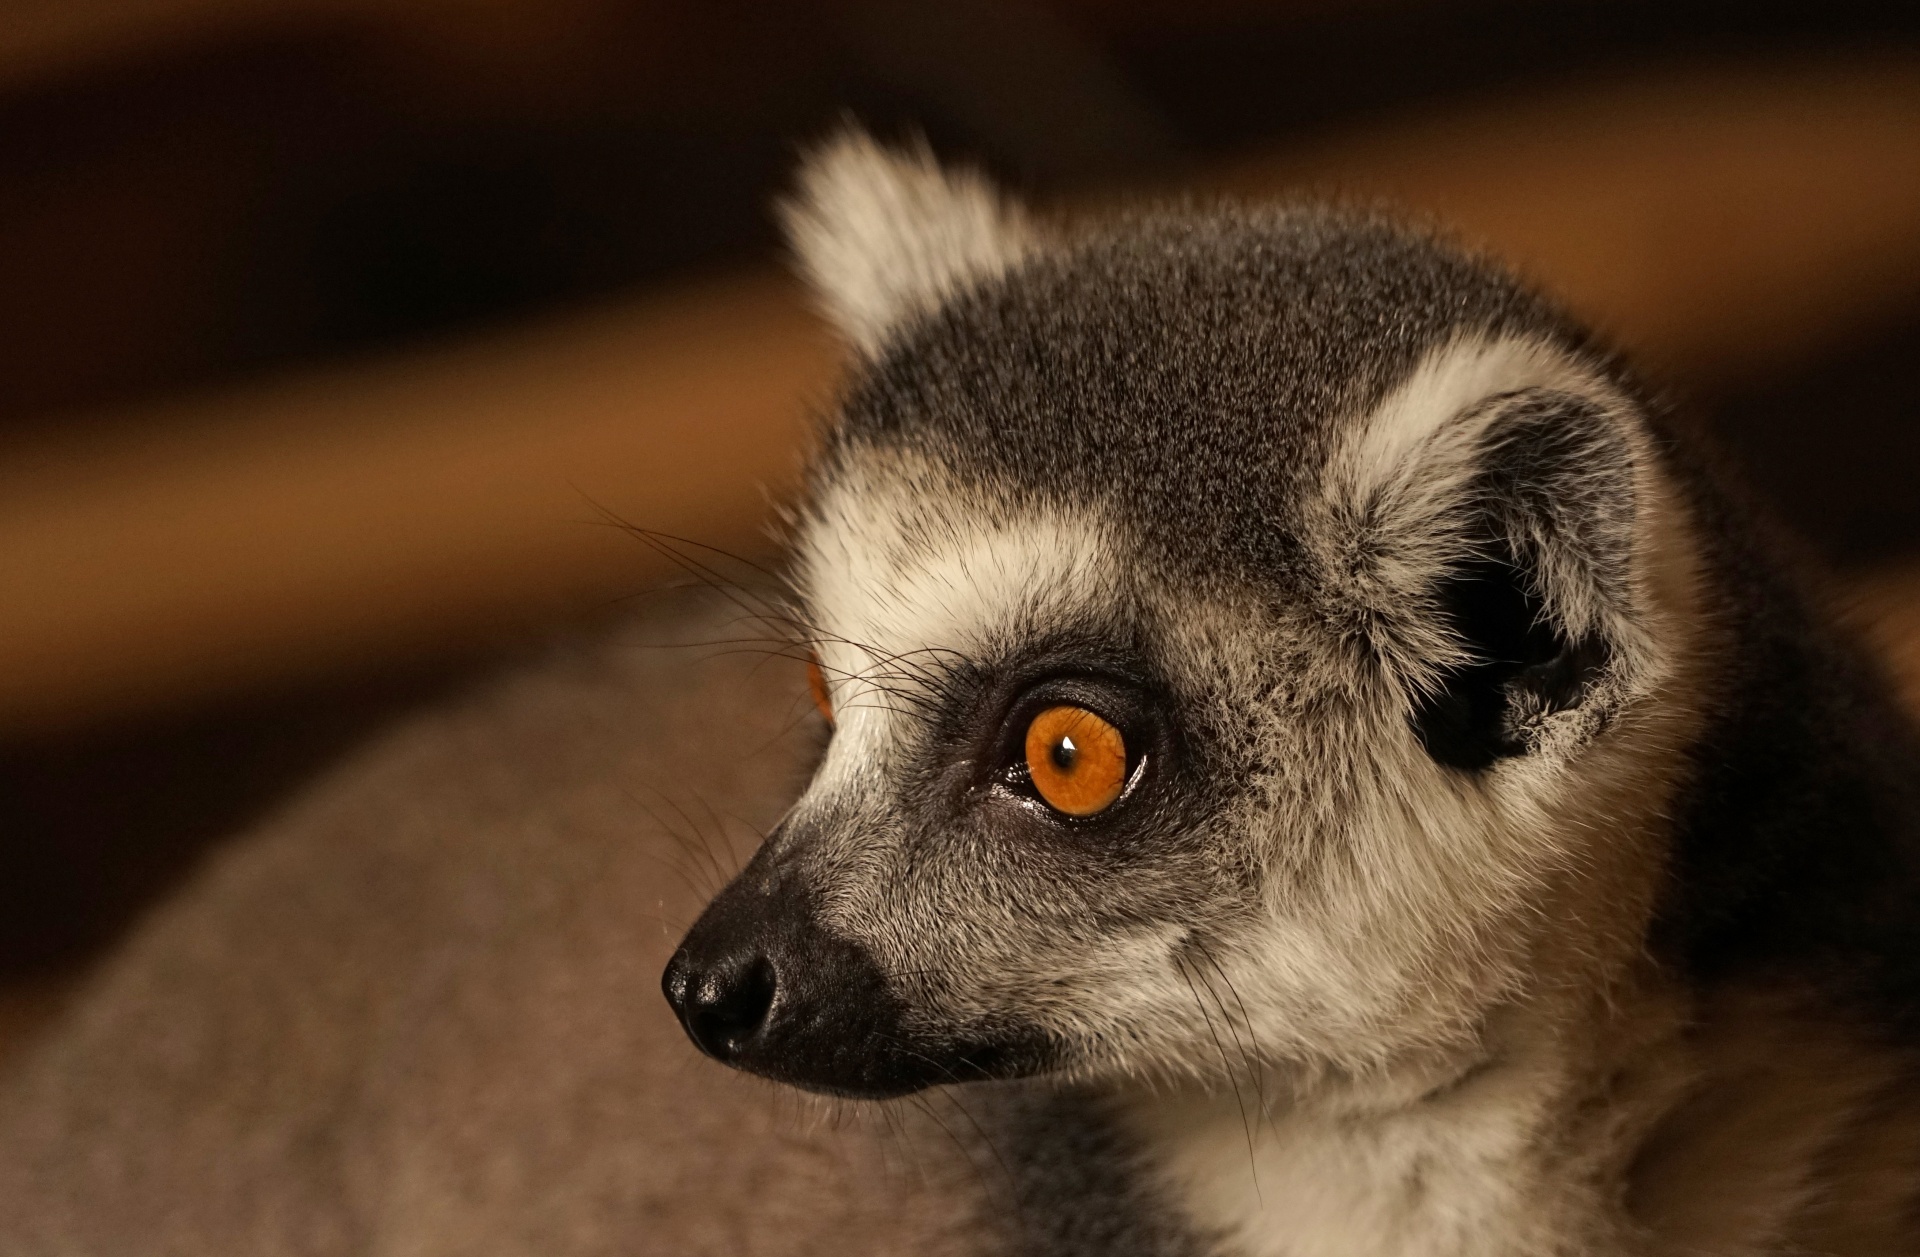 Magnificent Retrato do Lemur